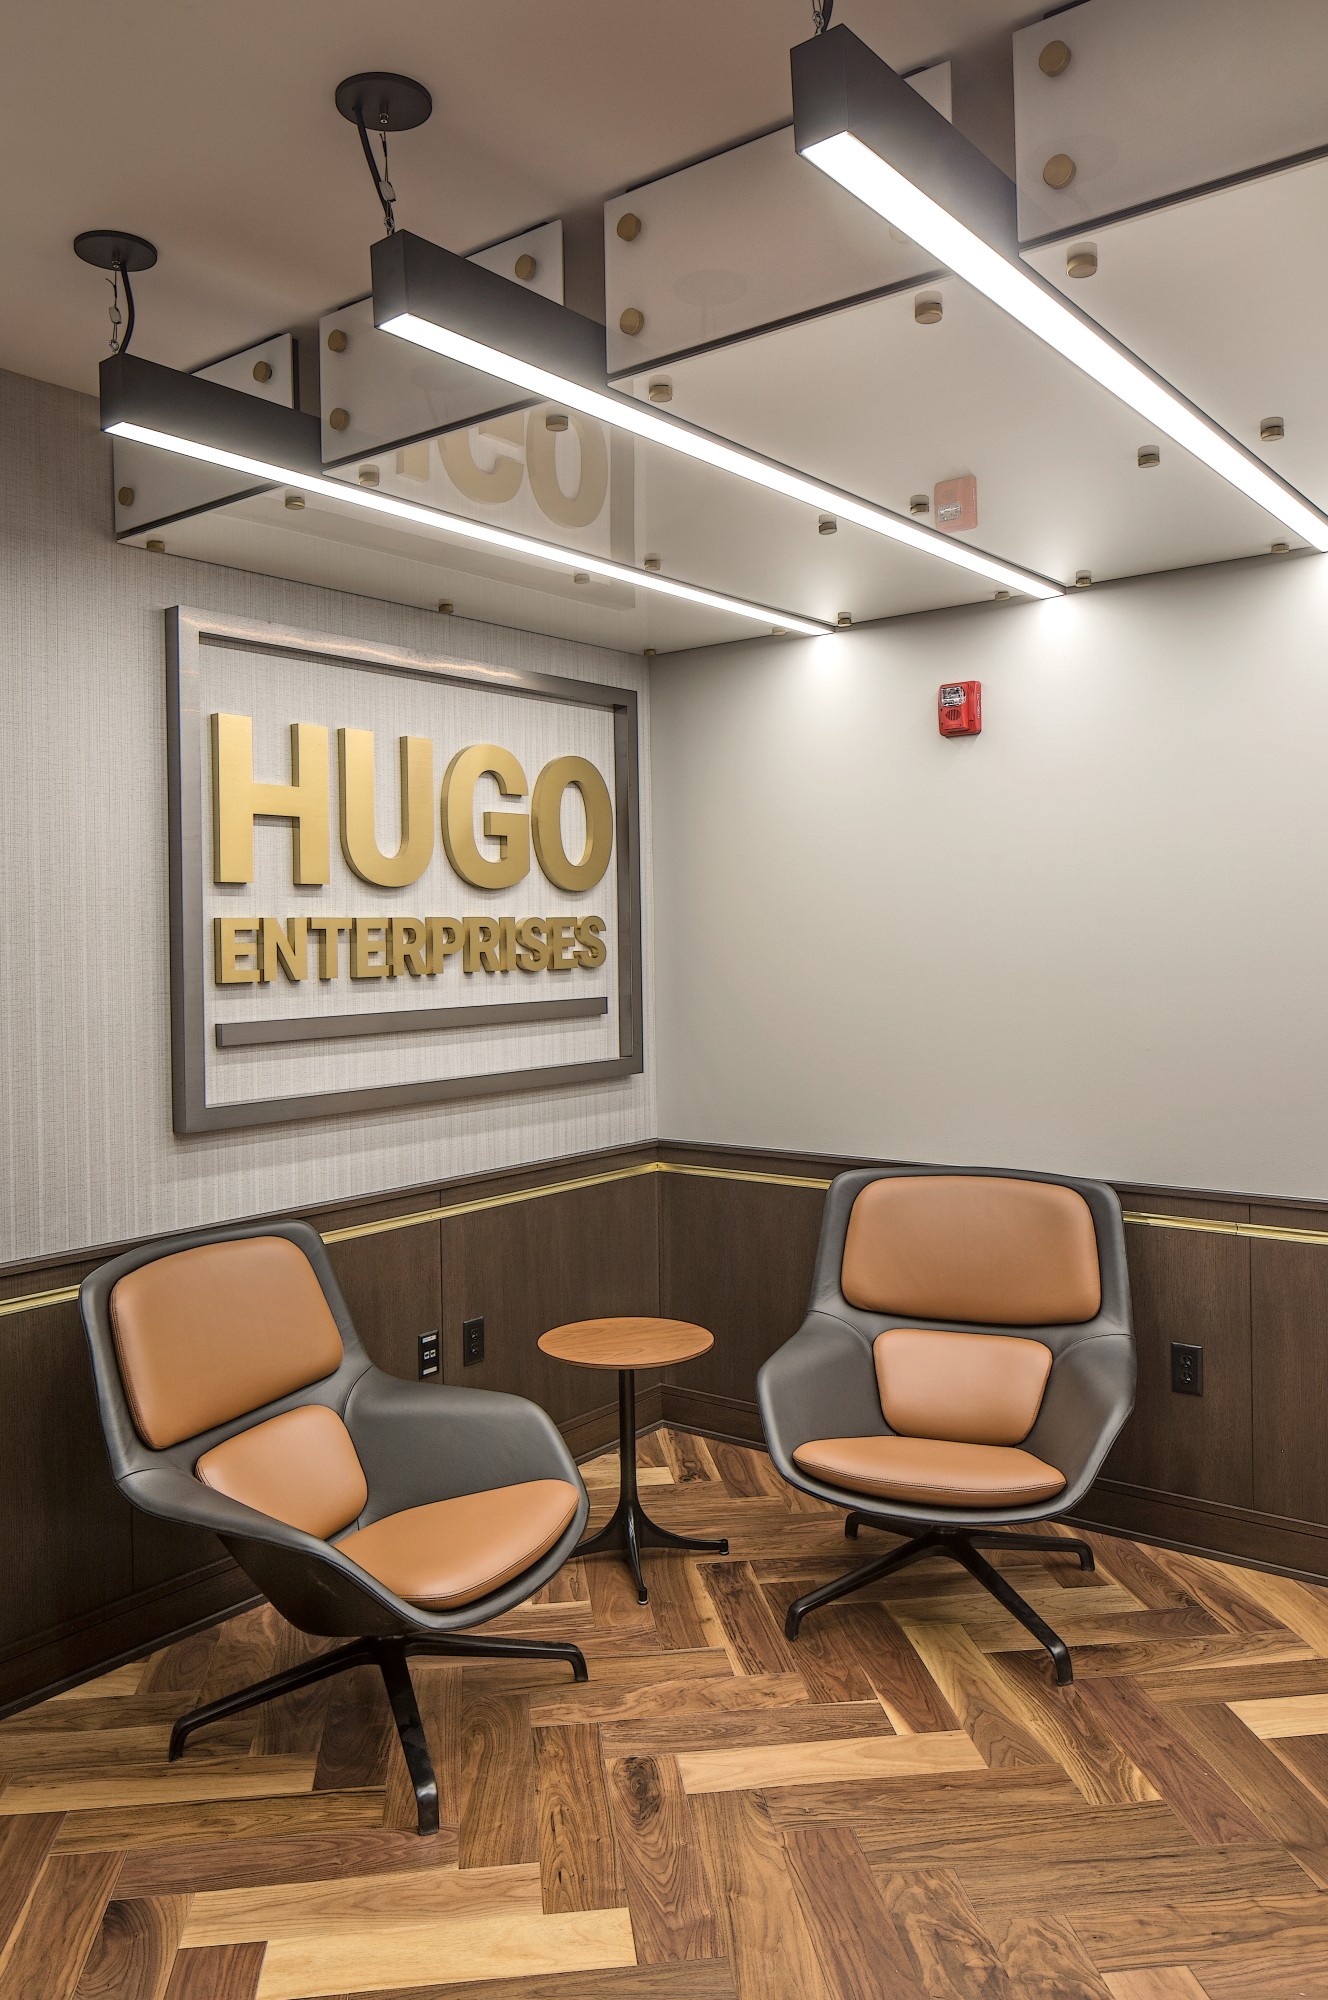 Hugo Enterprises